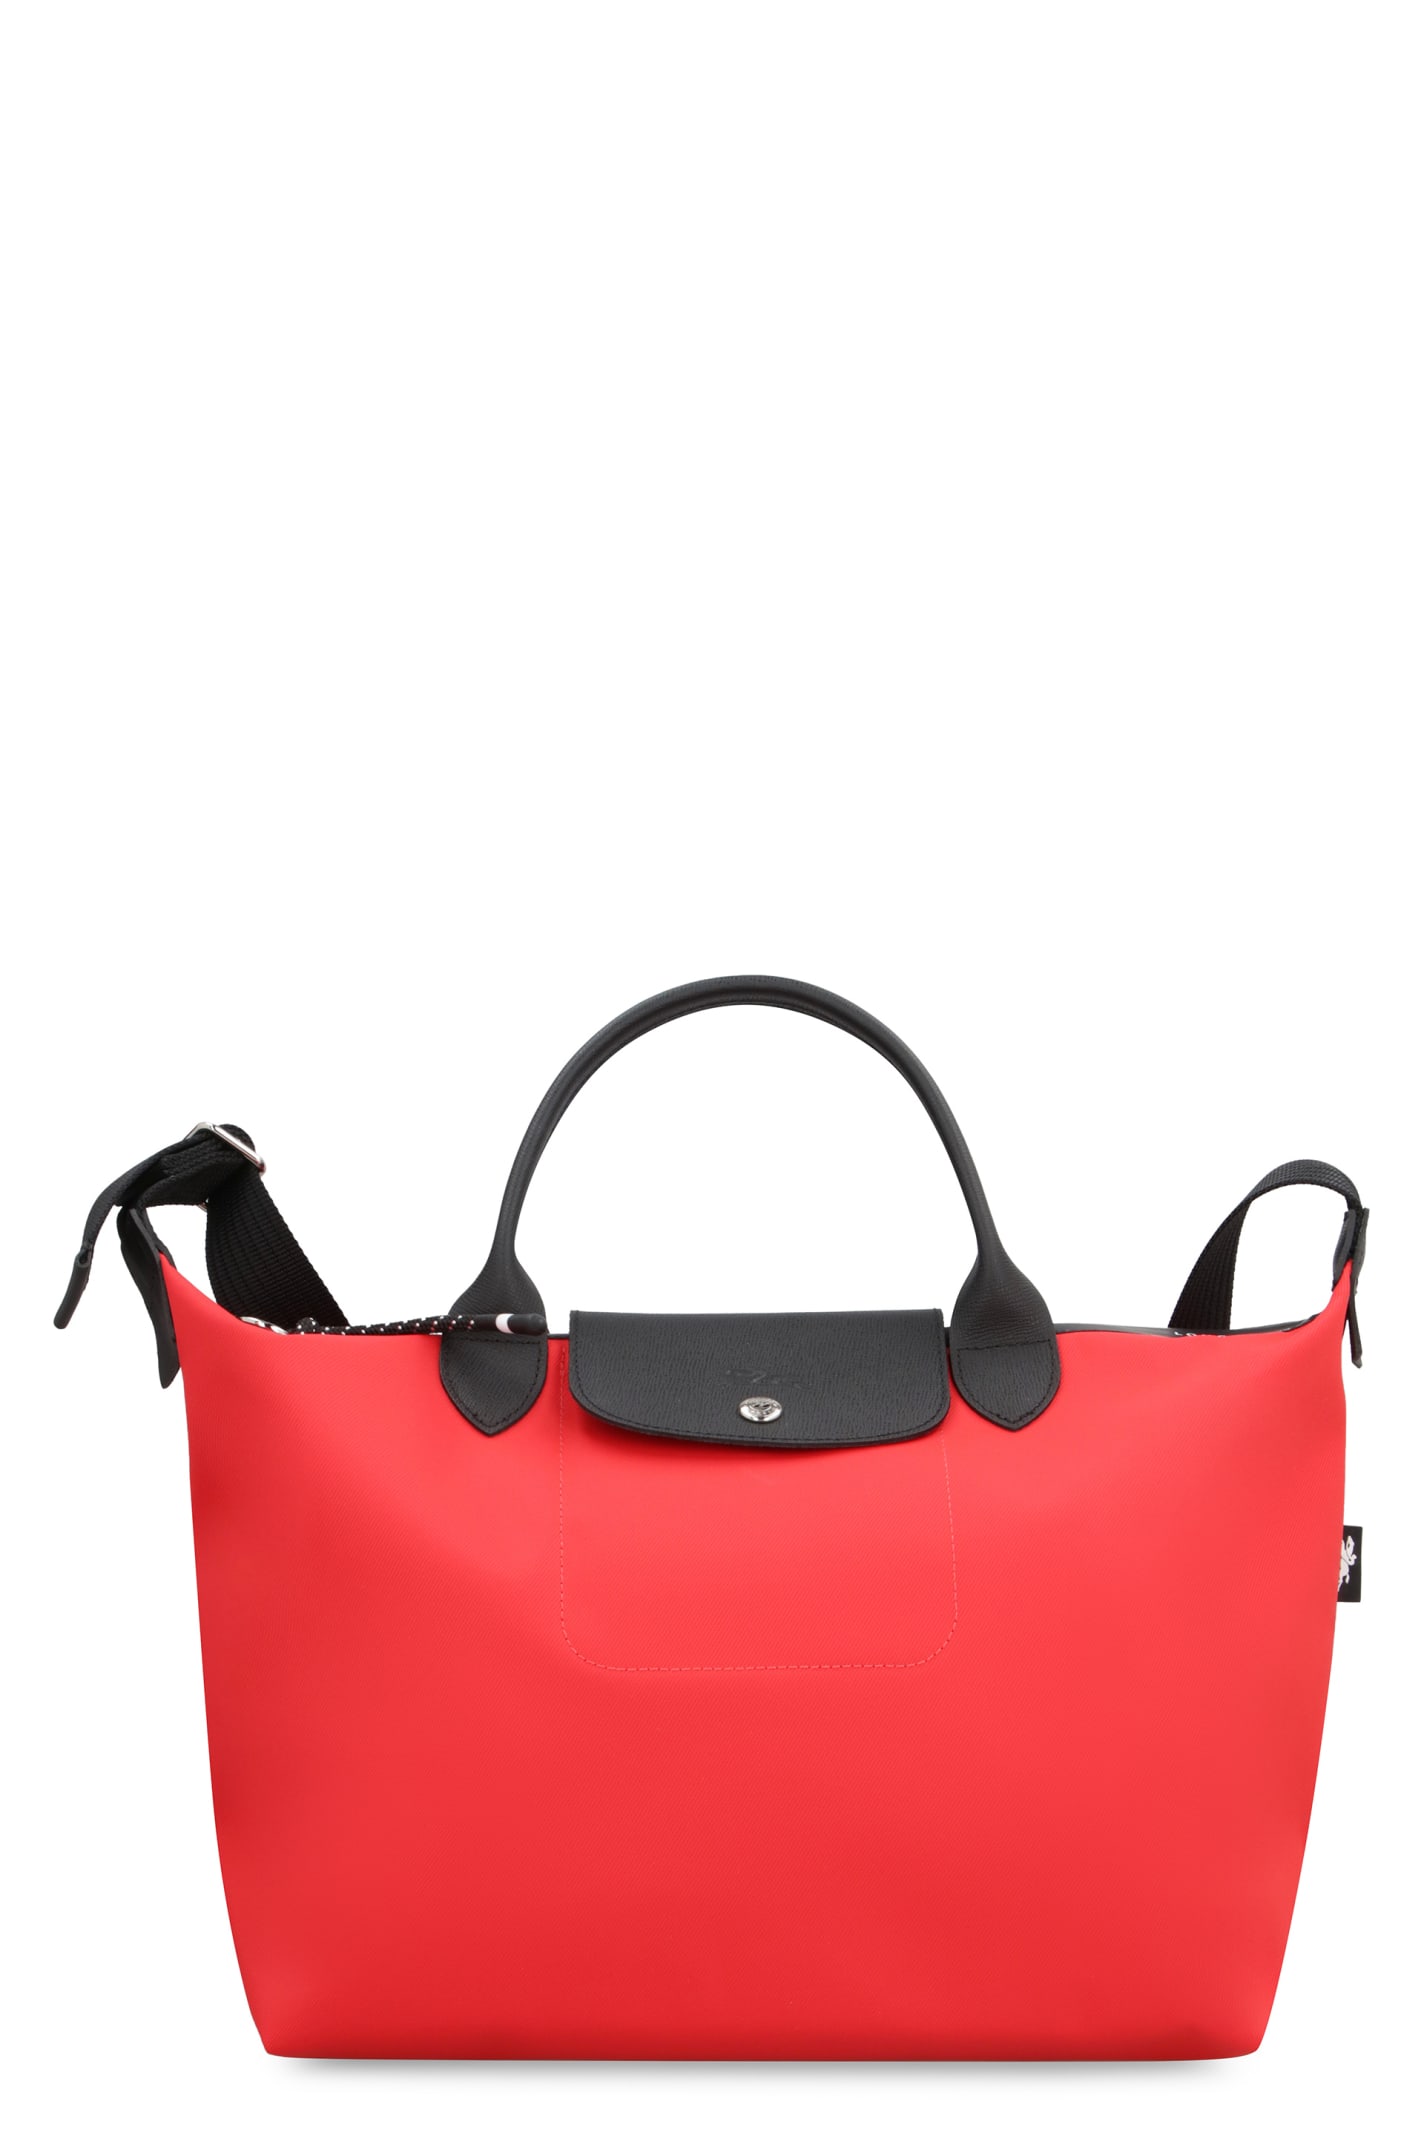 Longchamp Pliage Energy M Handbag